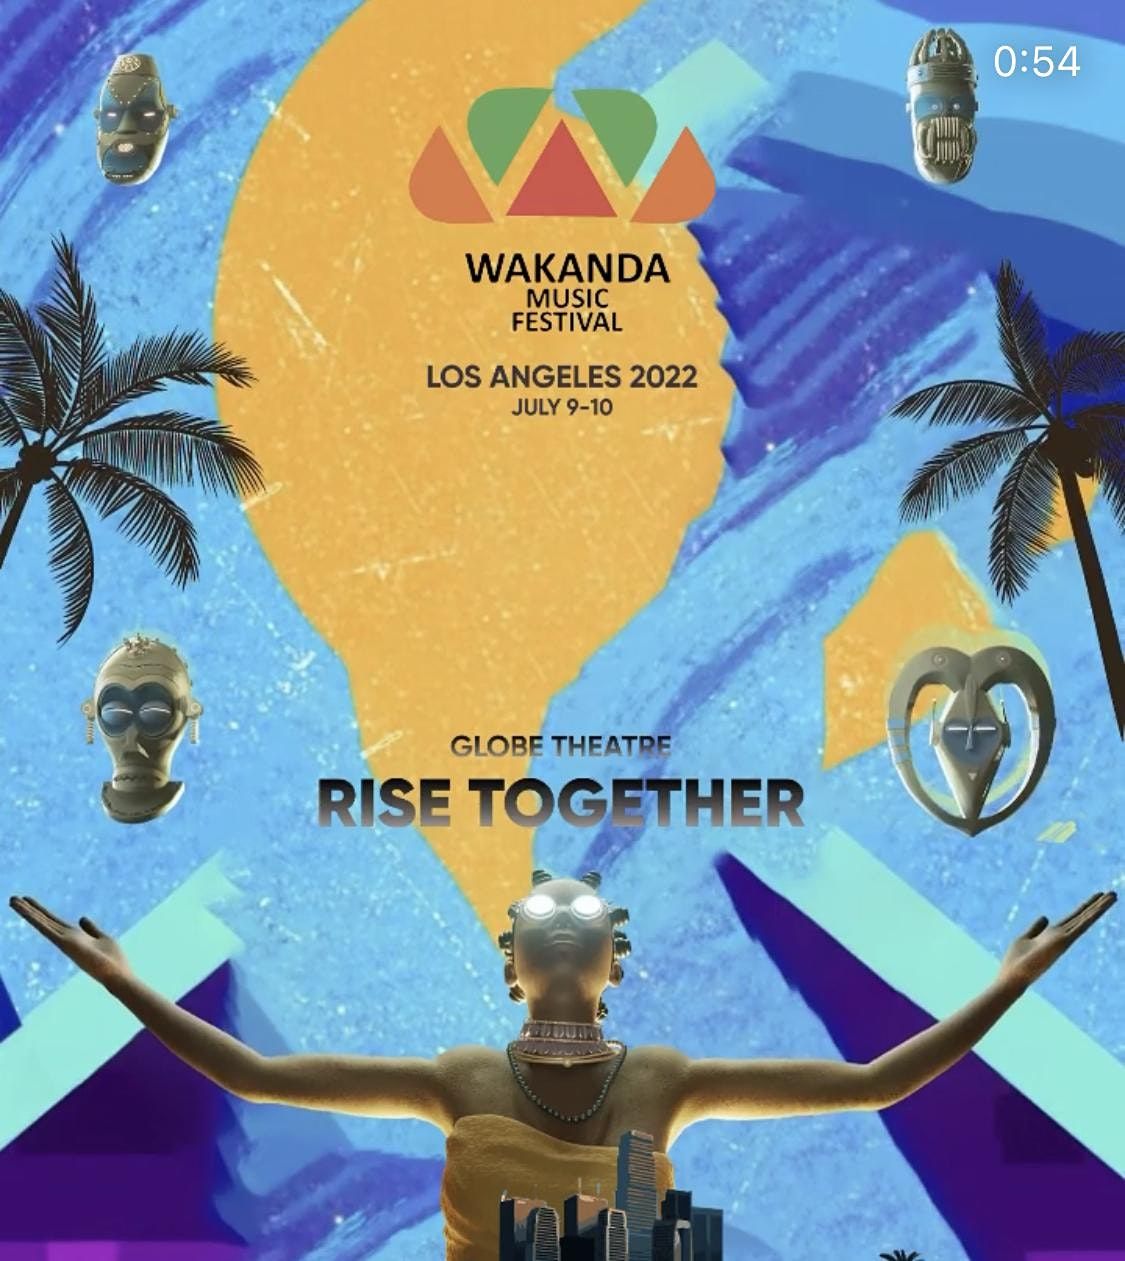 Wakanda Music Festival